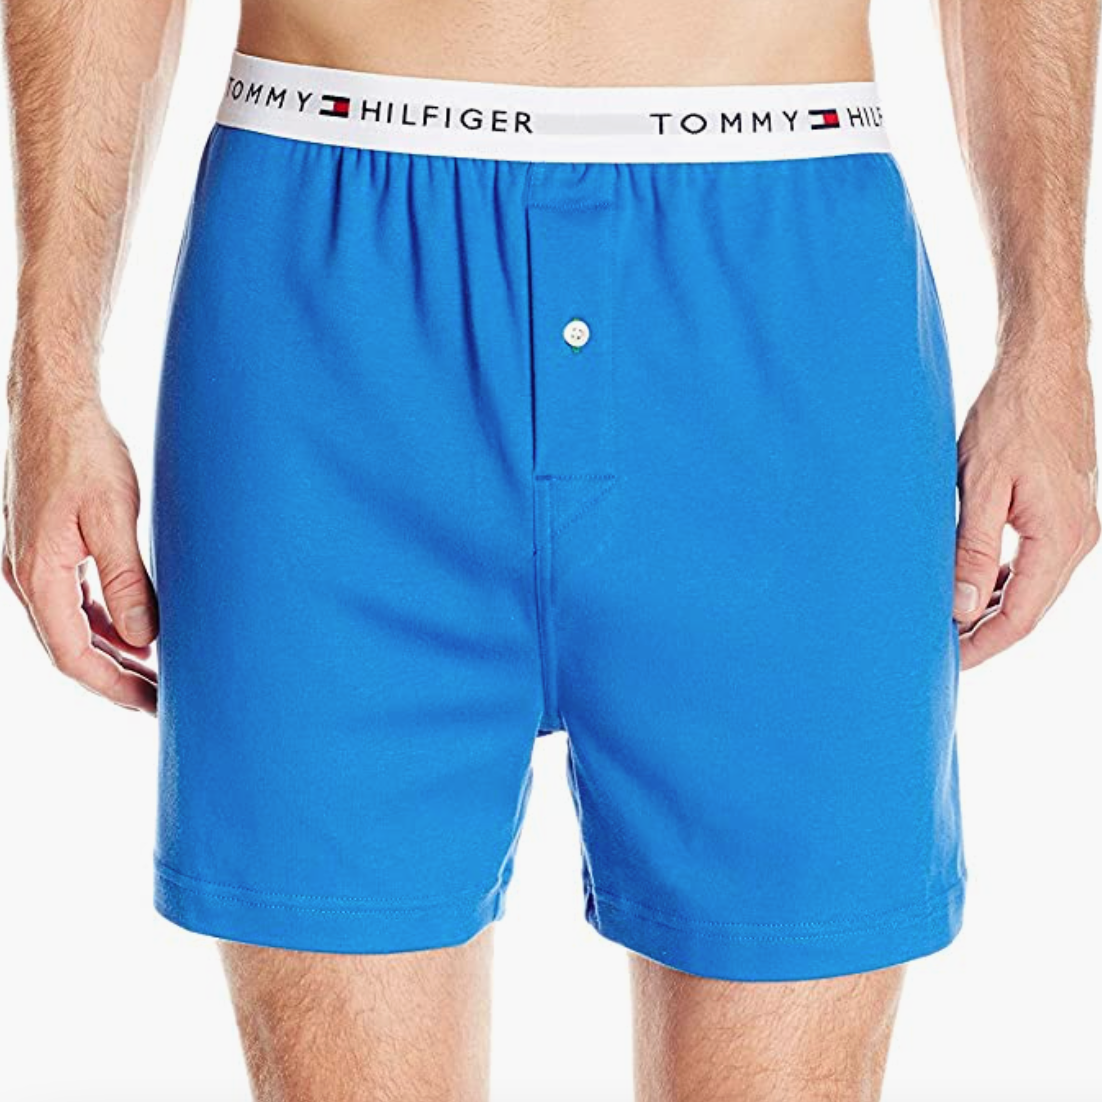 Tommy Hilfiger Men's Knit Boxer